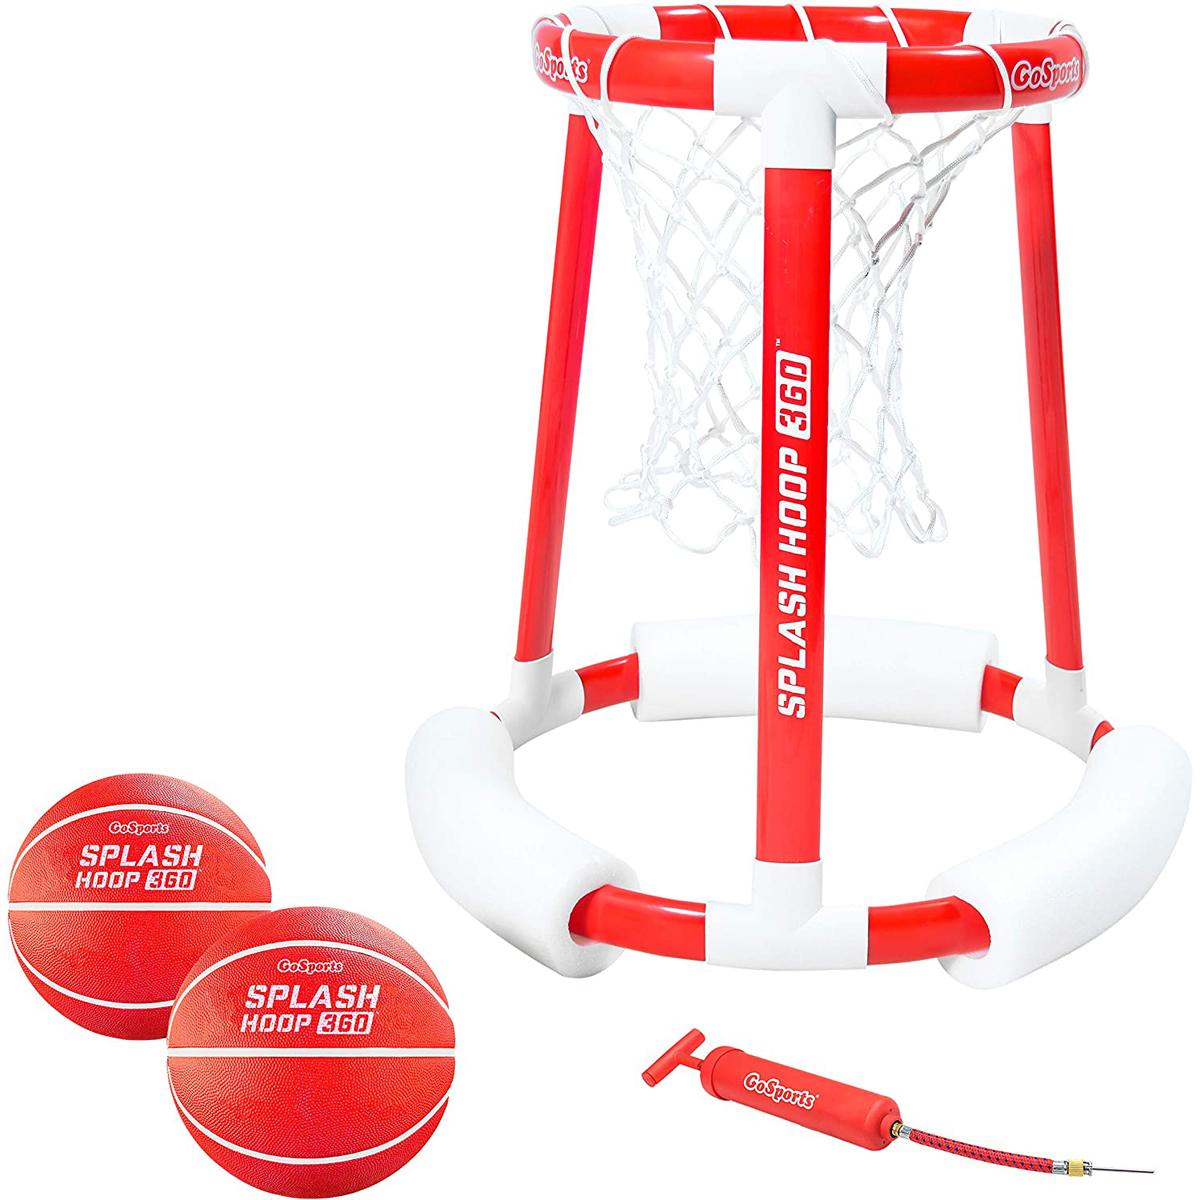 GoSports Splash Hoop 360 Floating Pool Basketball Game Set for $12.47